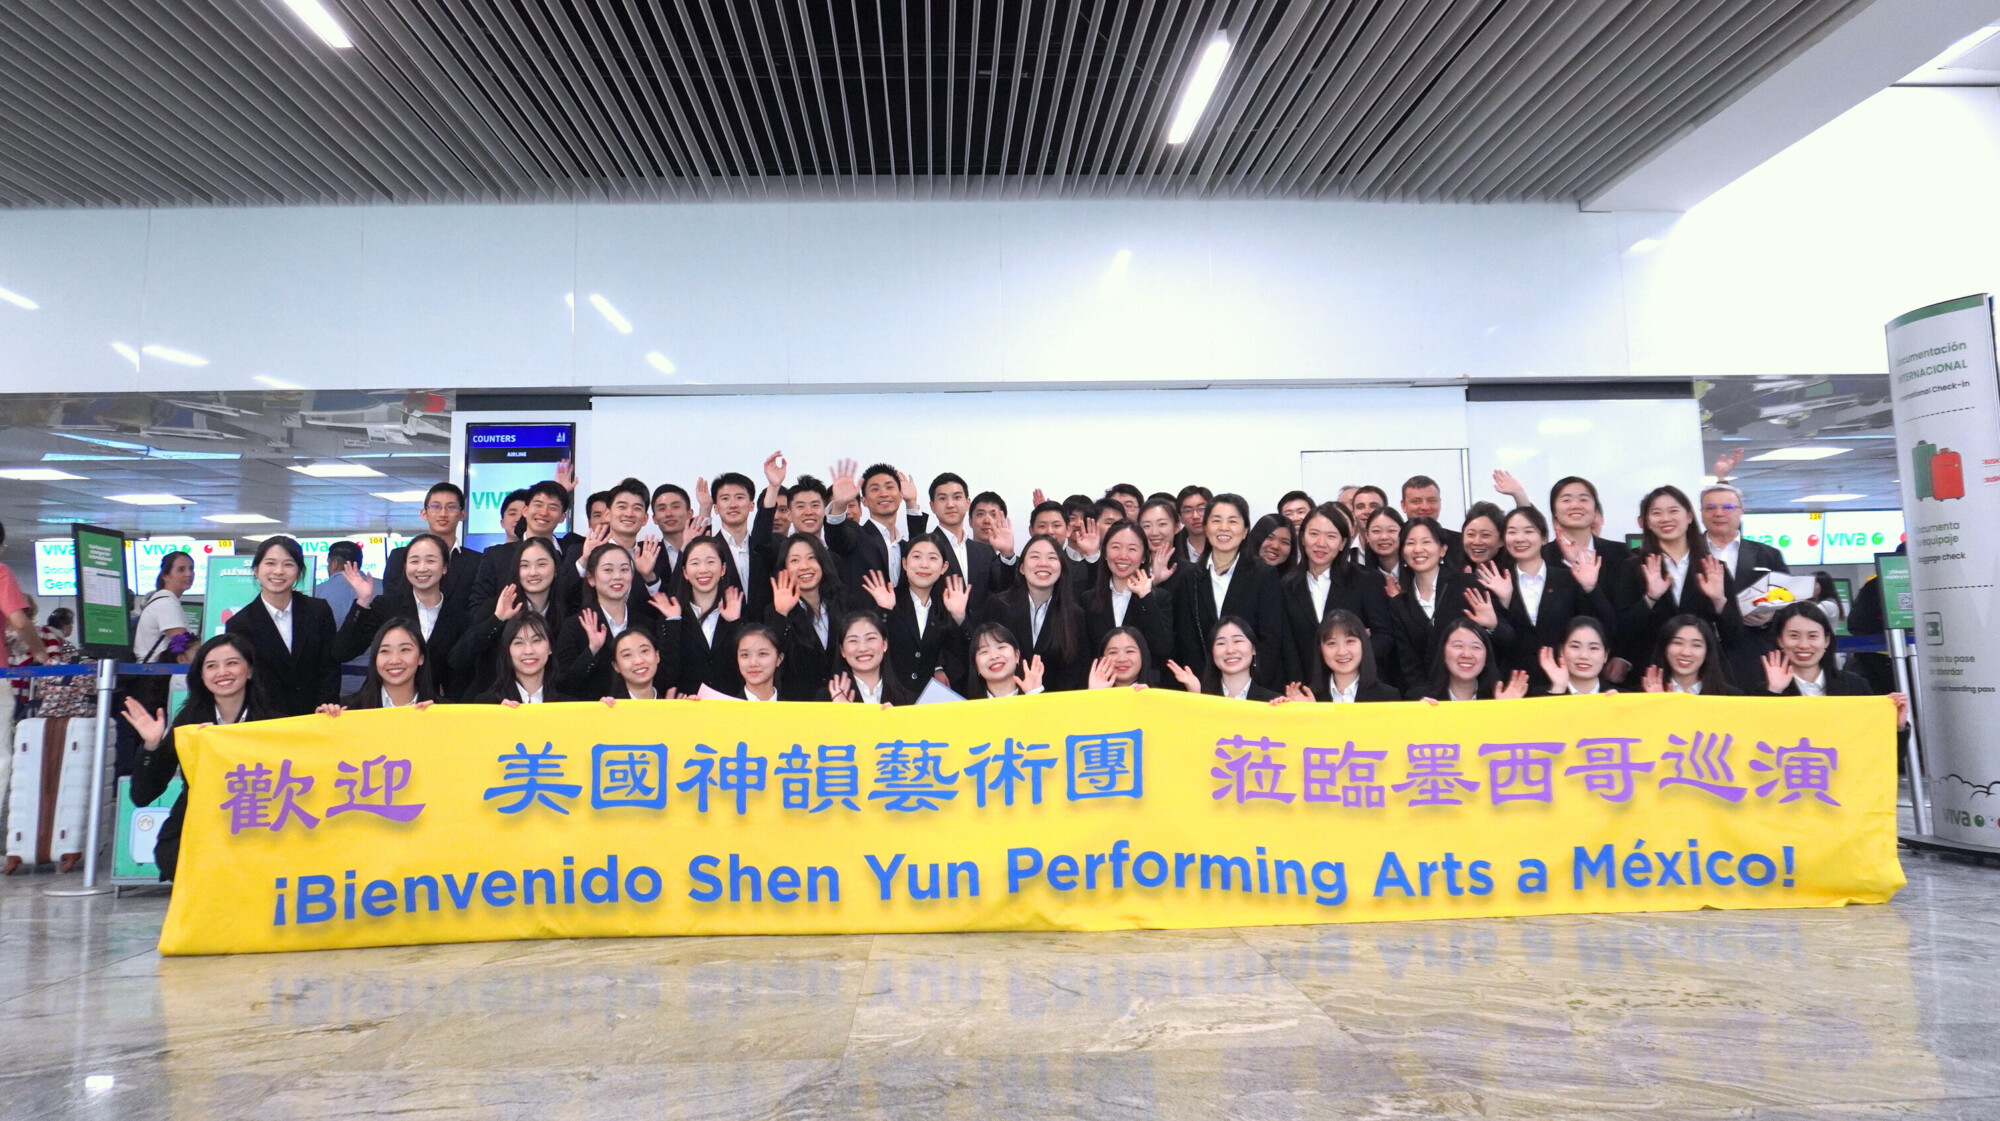 La emoción de Shen Yun llega a México: Guadalajara recibe a compañía con doble temporada por alta demanda